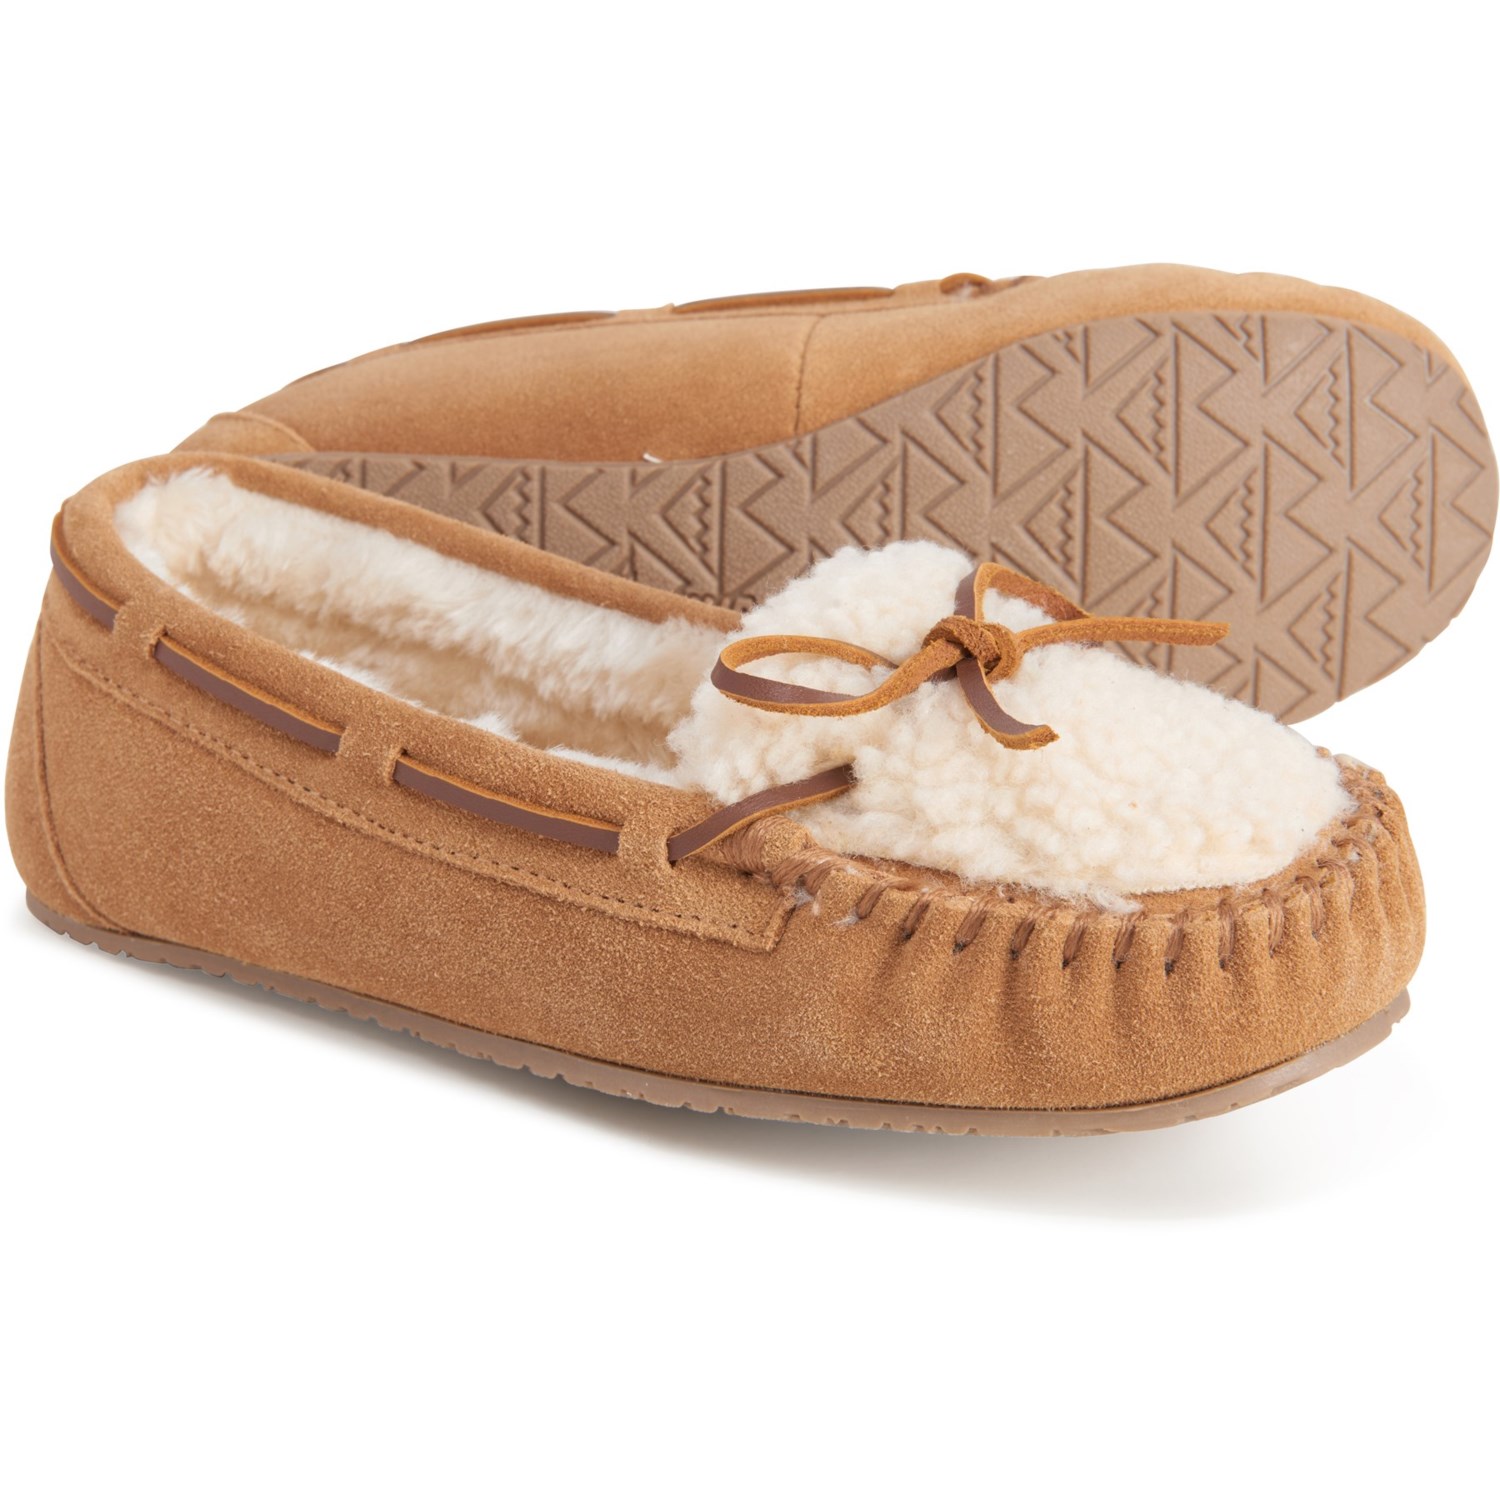 womens sandles flip flops size 11 new with tags Schoenen damesschoenen Sandalen Slippers & Teenslippers 